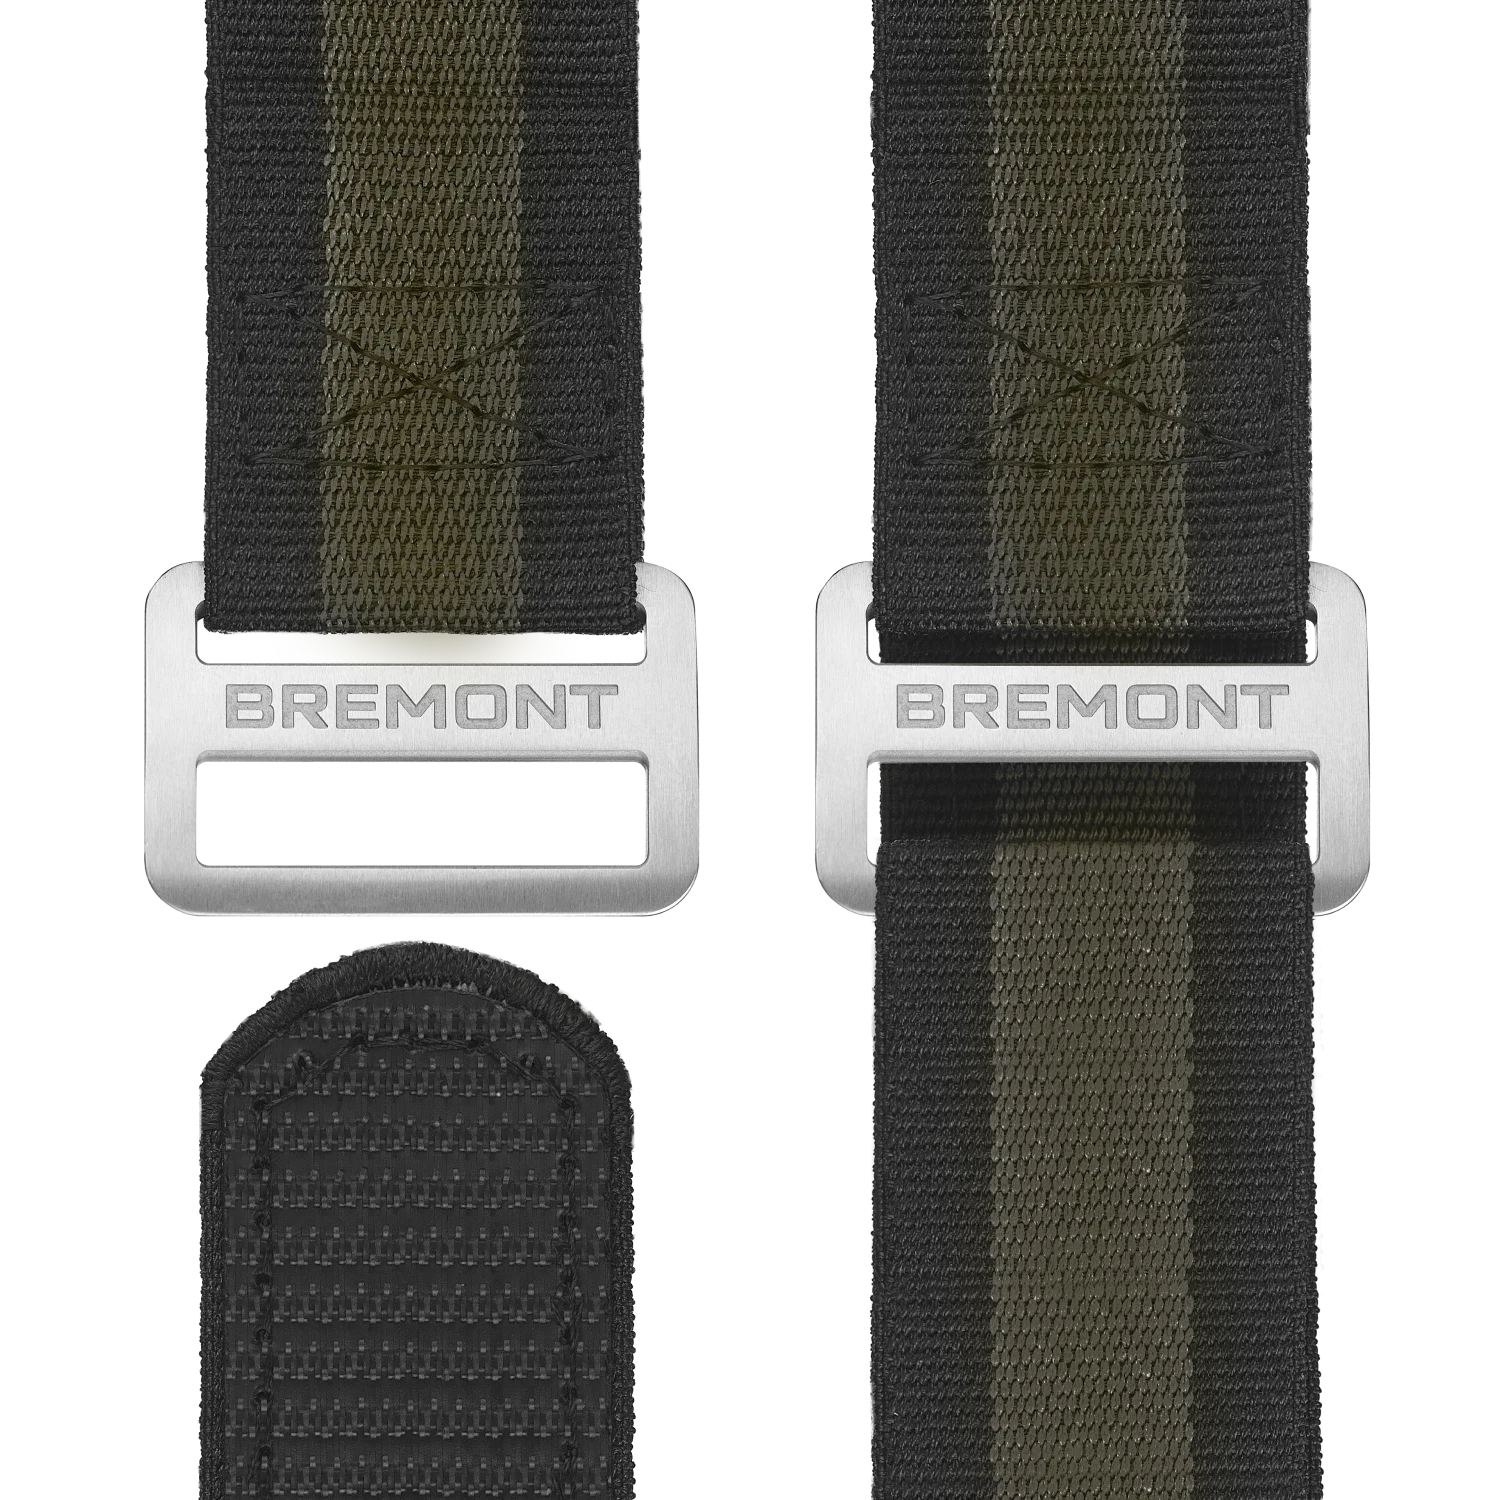 Bremont Watch Company Watches | Mens | Terra Nova Terra Nova 40.5 Date [Green Dial, NATO]